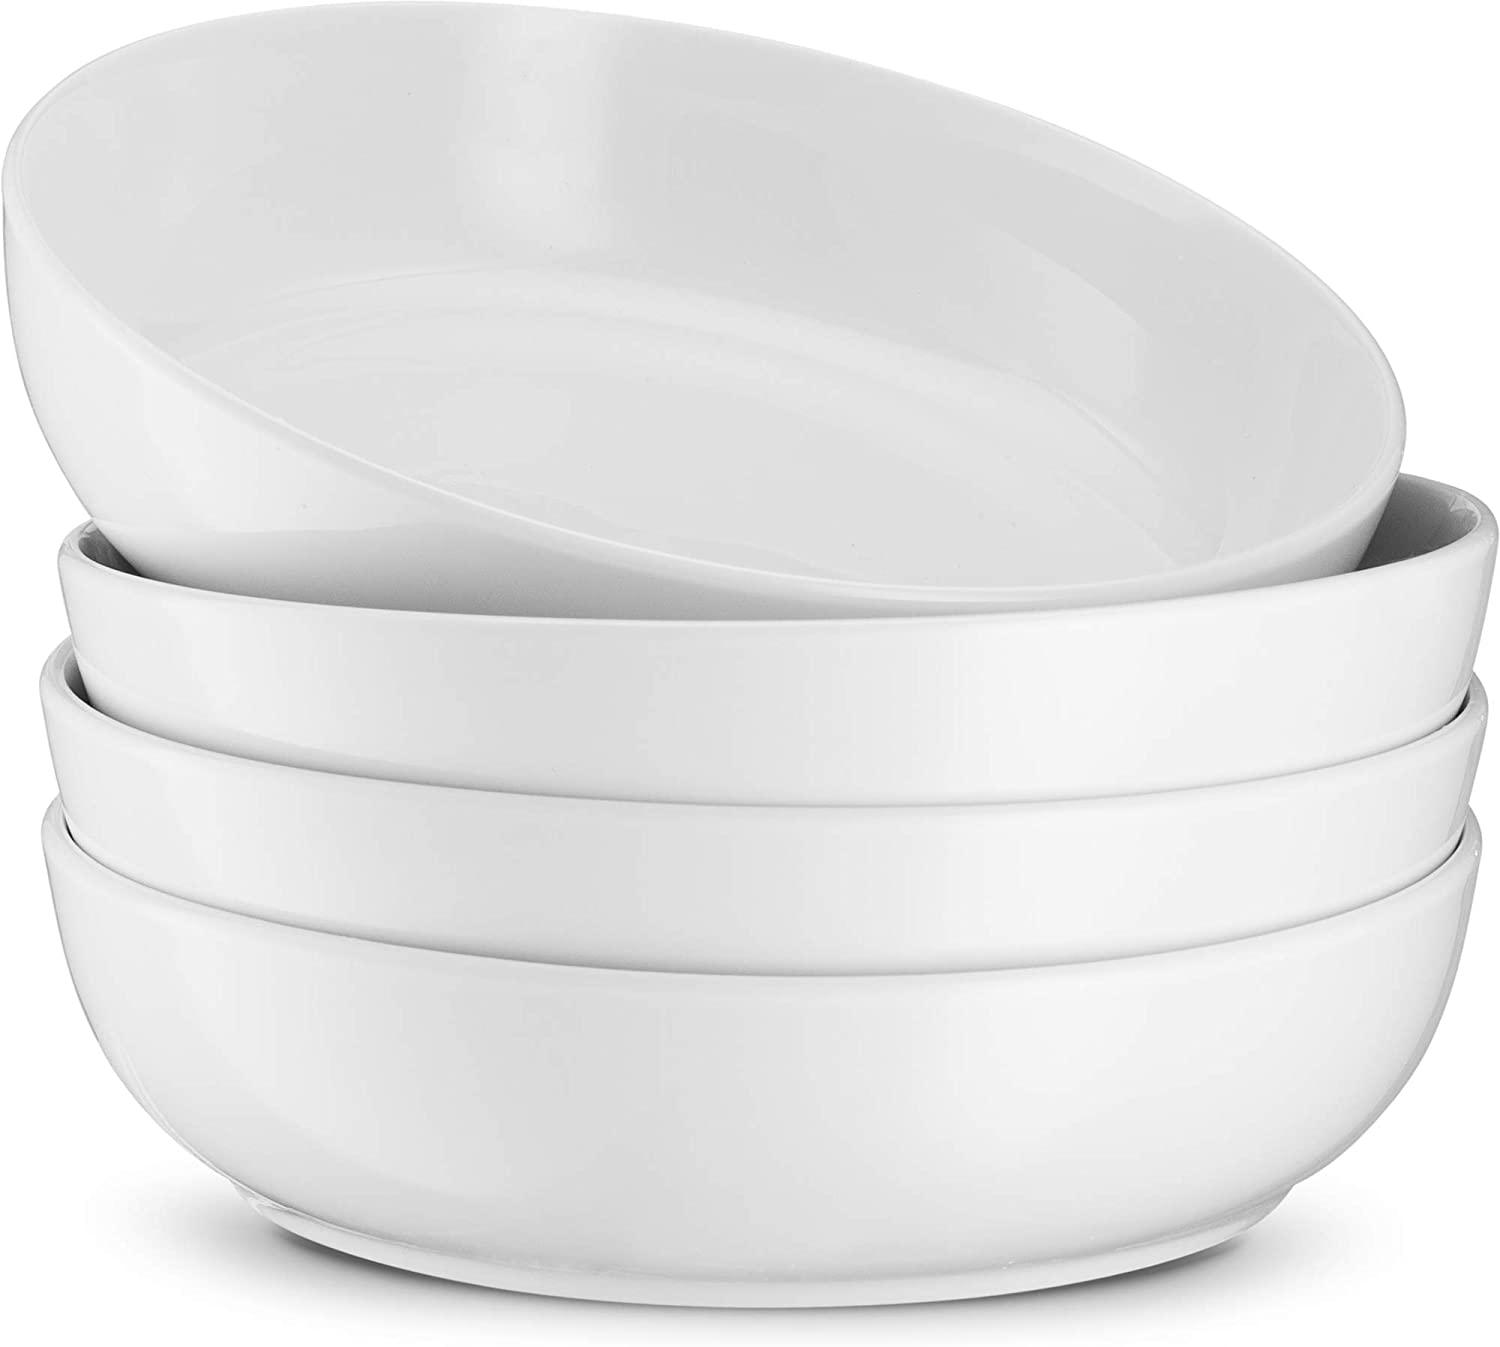 4 Kook Ceramic Pasta Salad Bowls for $20.03 Shipped